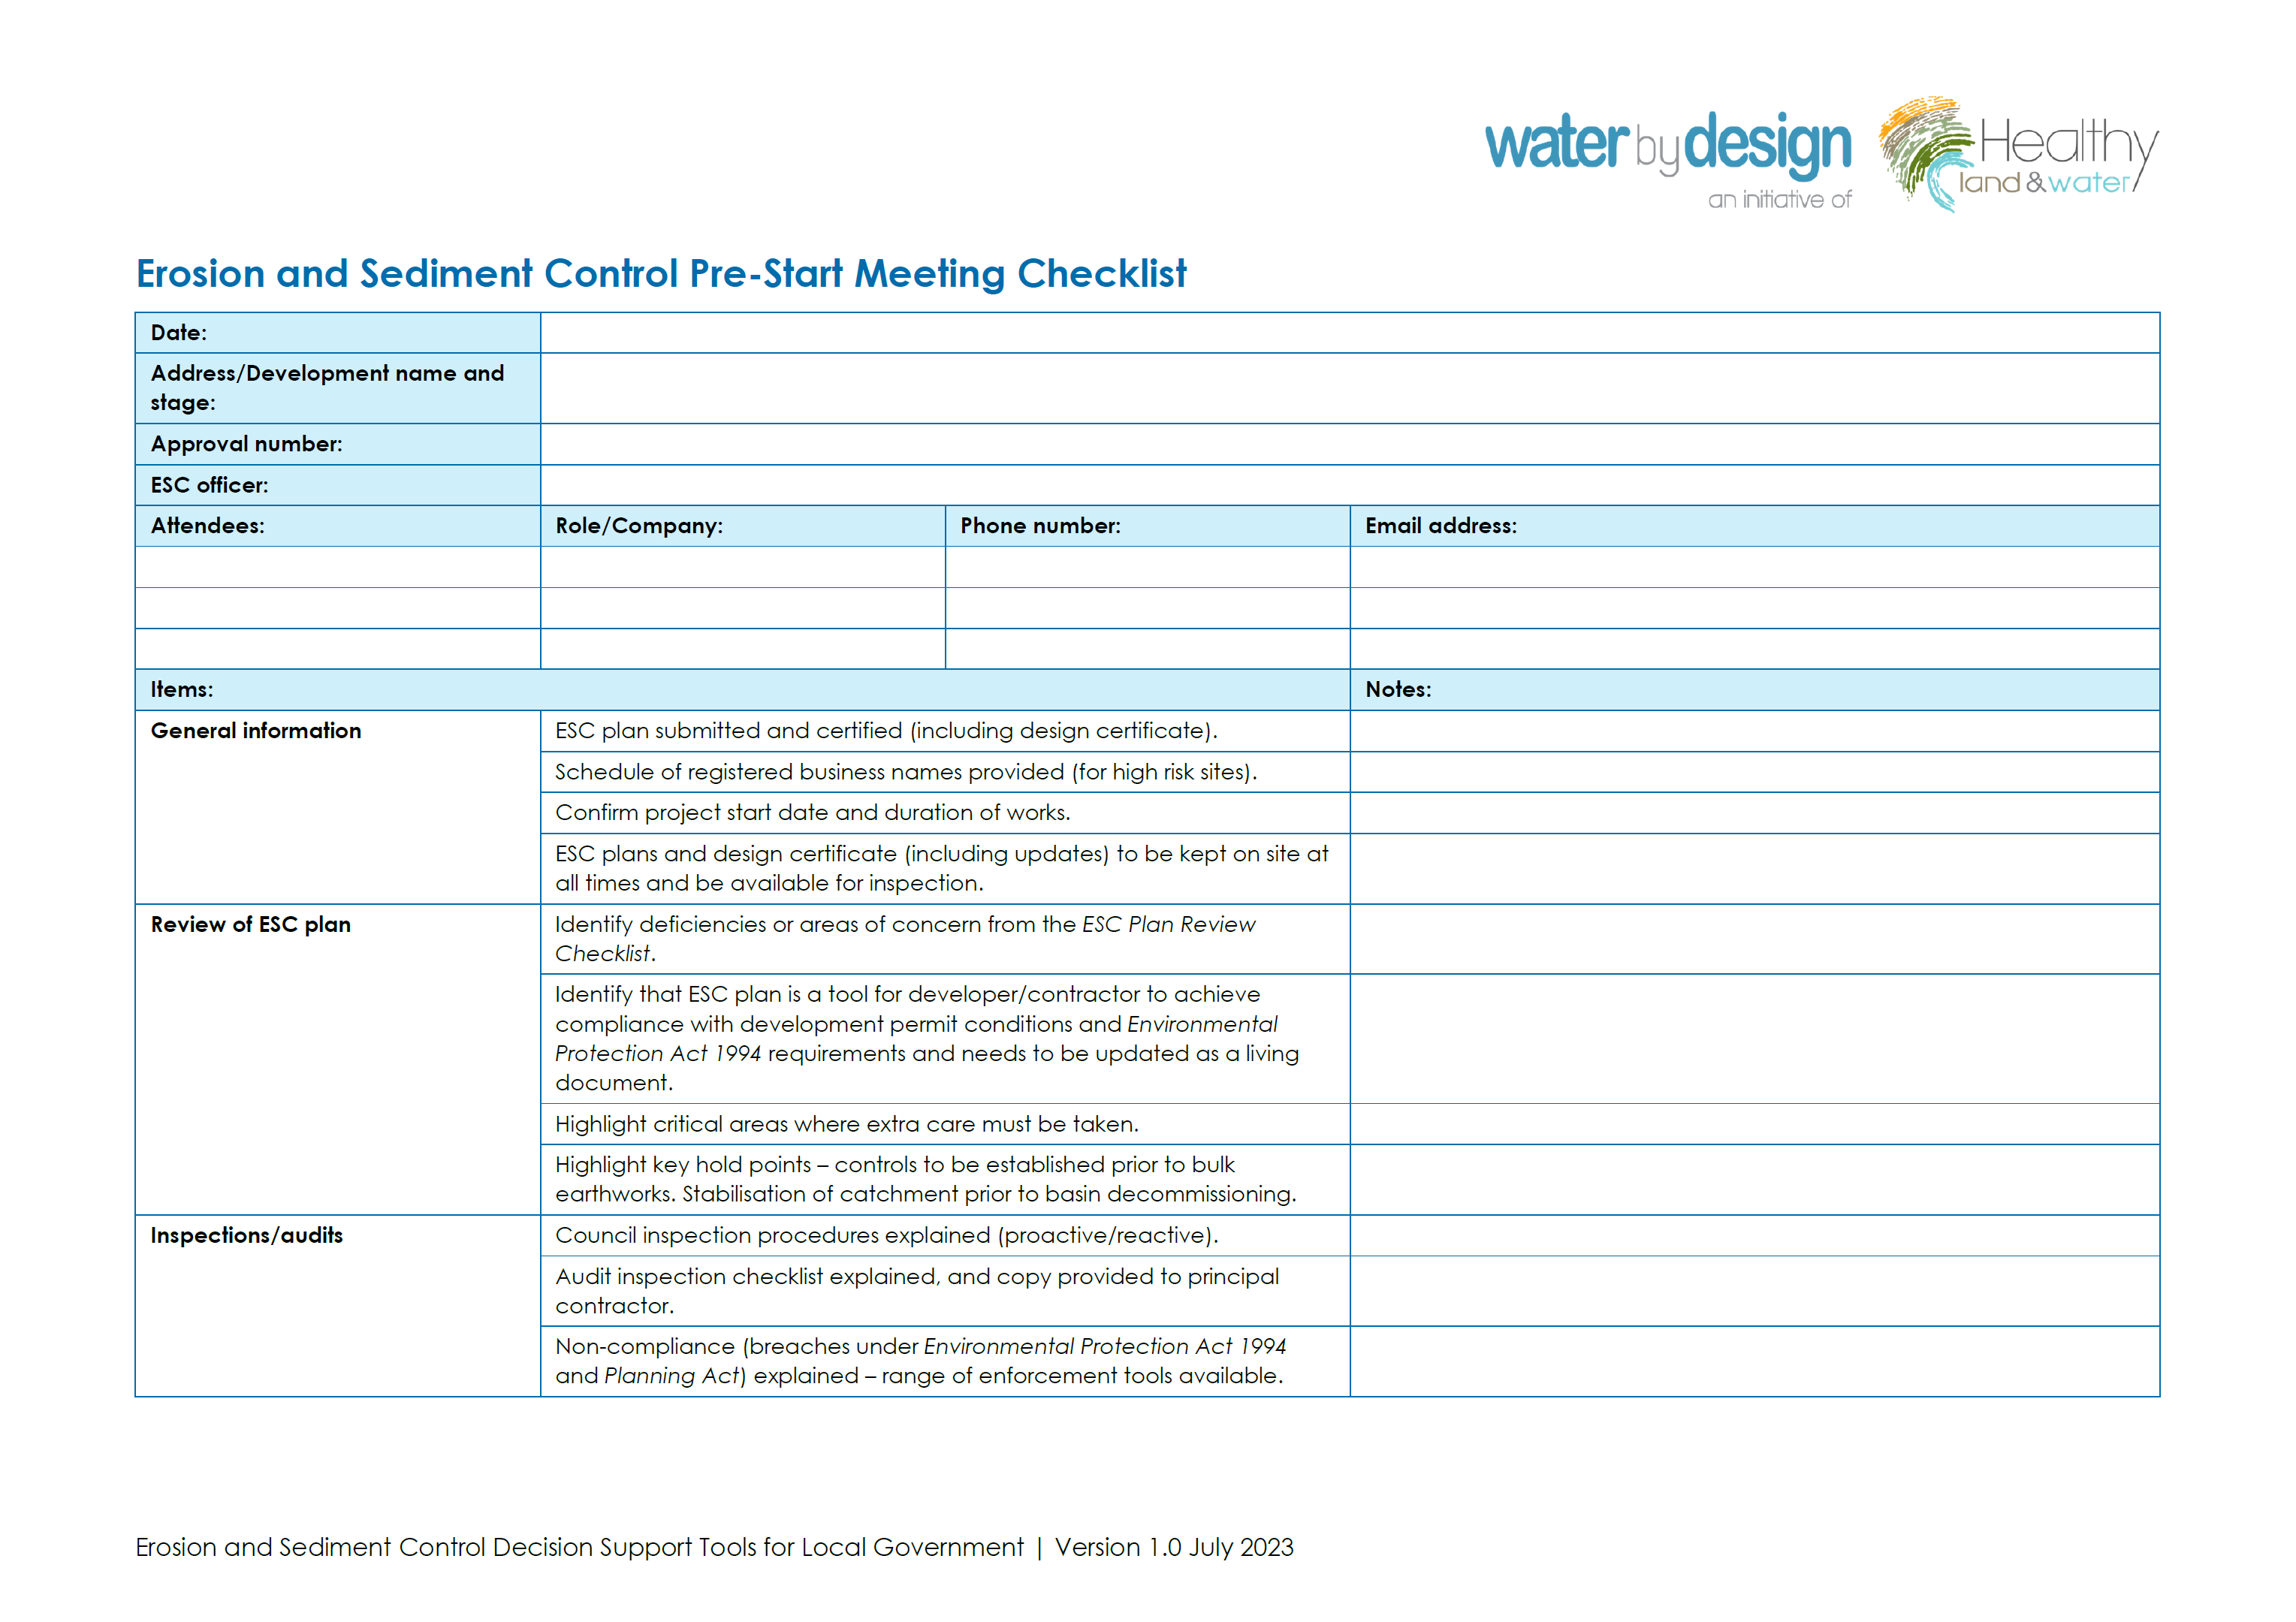 Erosion and Sediment Control Pre-start Meeting Checklist (2023)